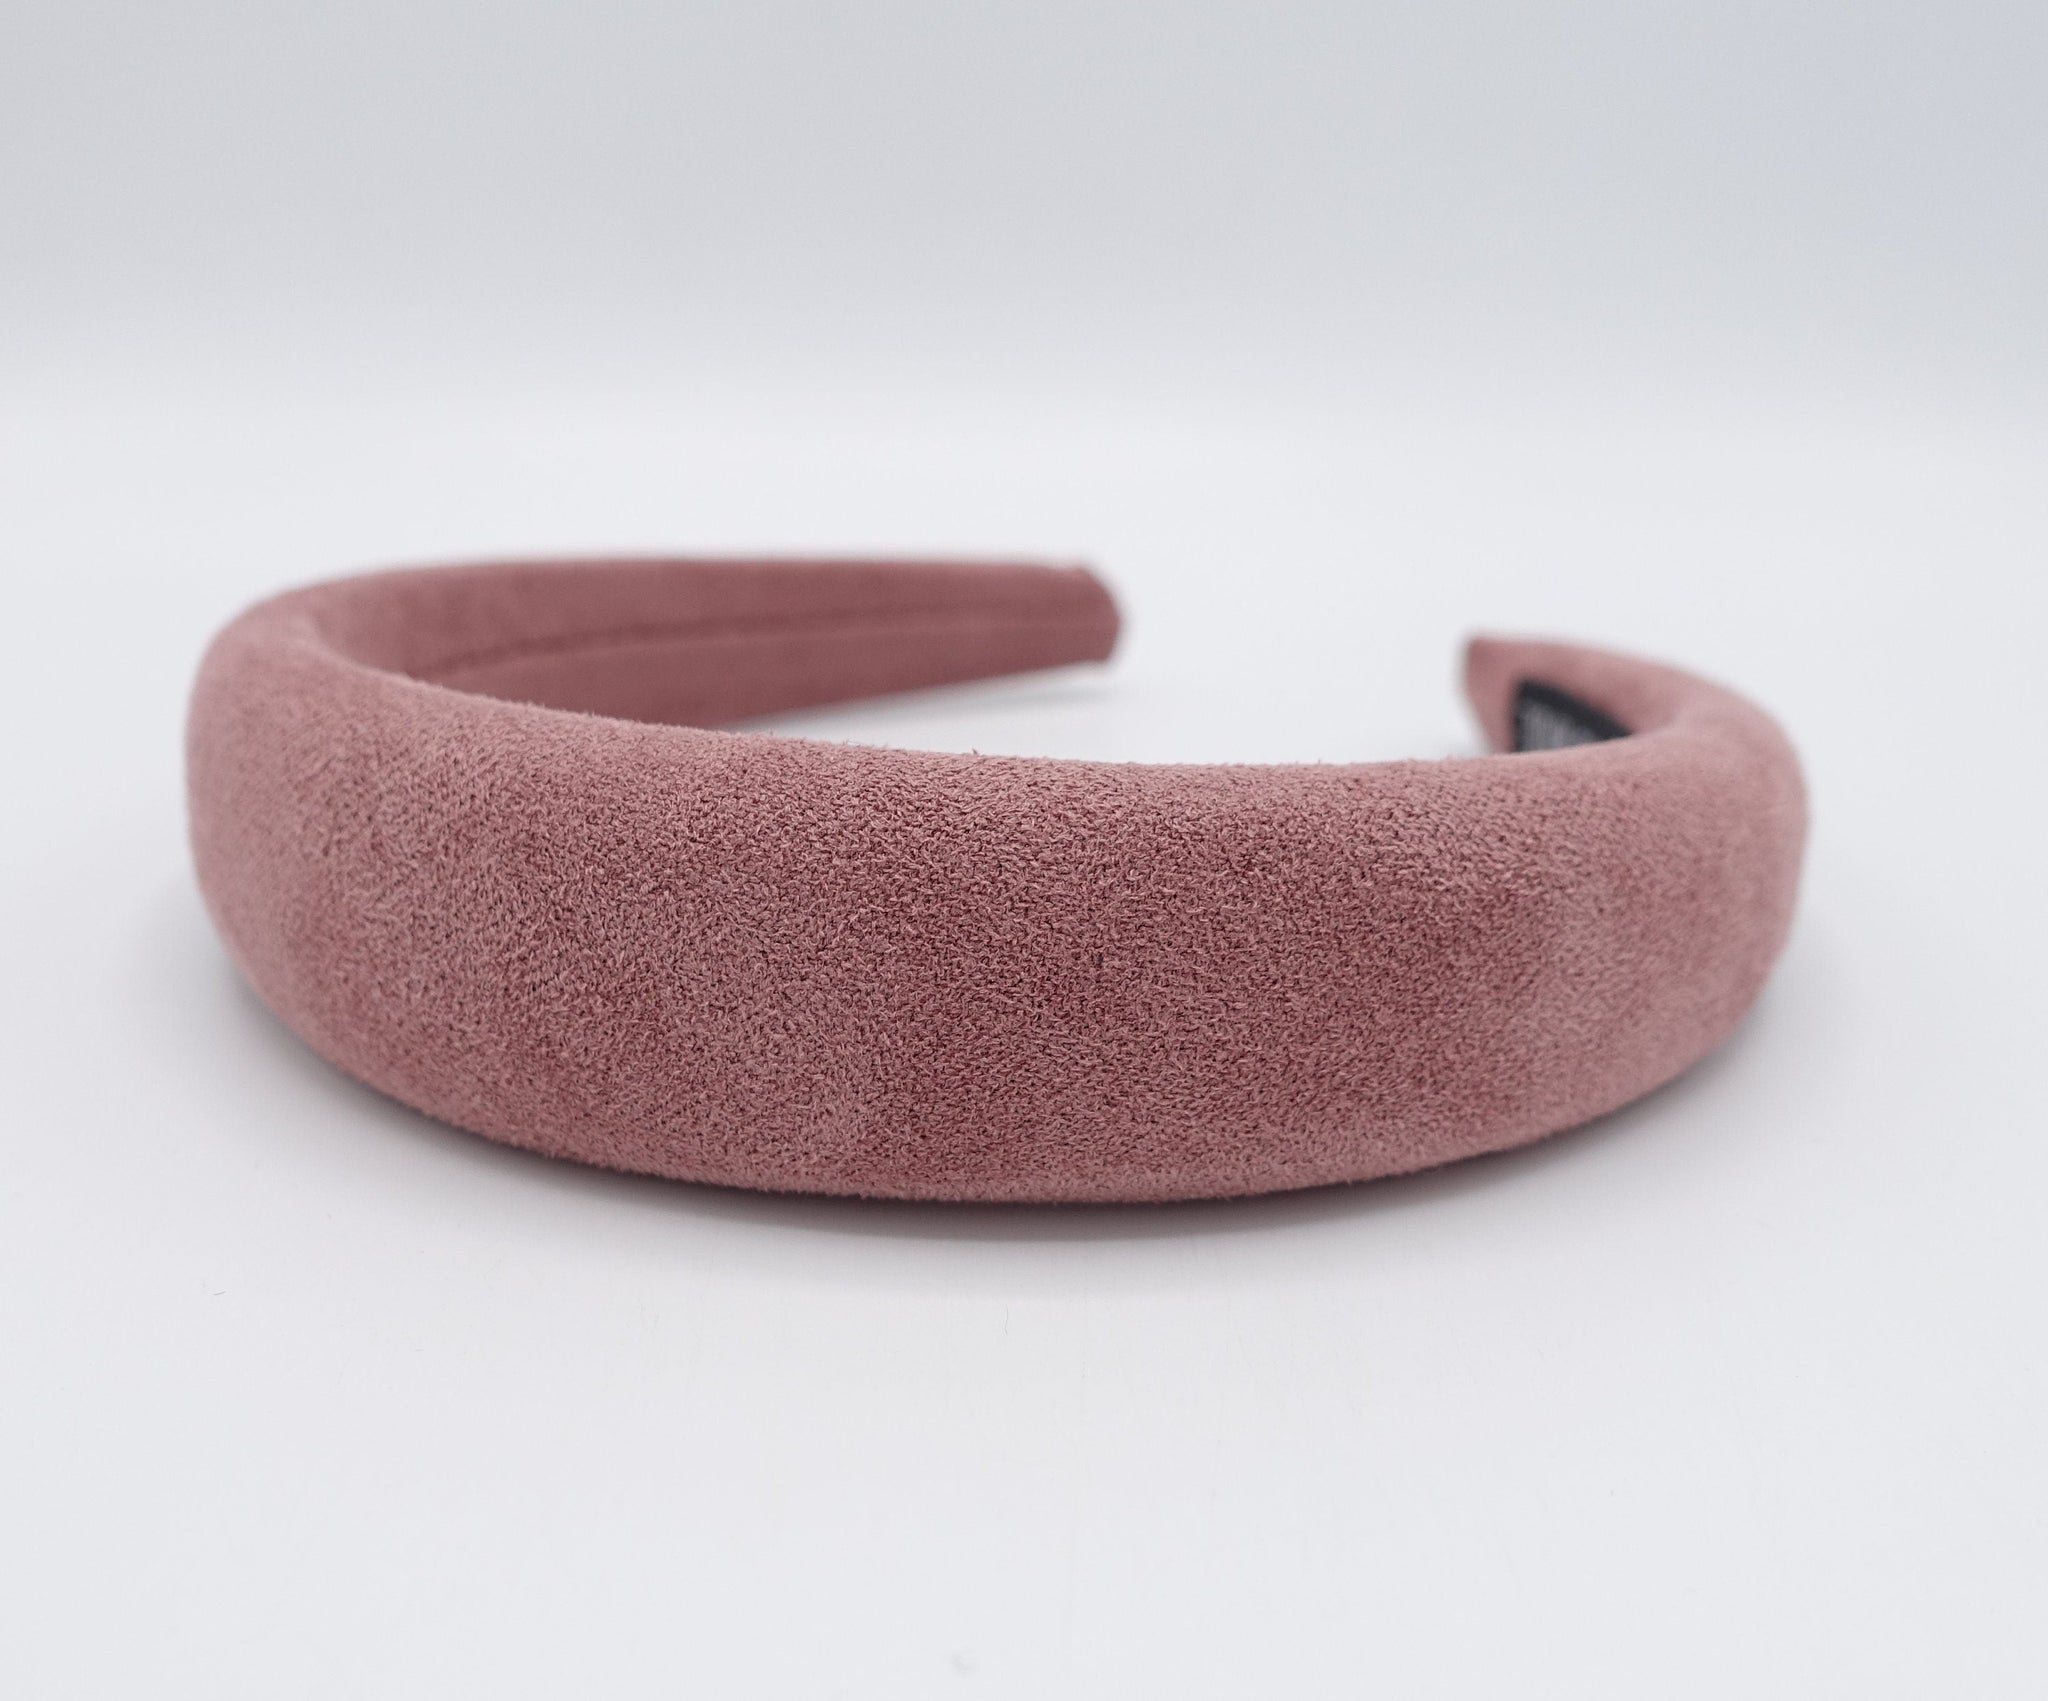 veryshine.com Headband Pink Suede fabric headband, padded headband for women